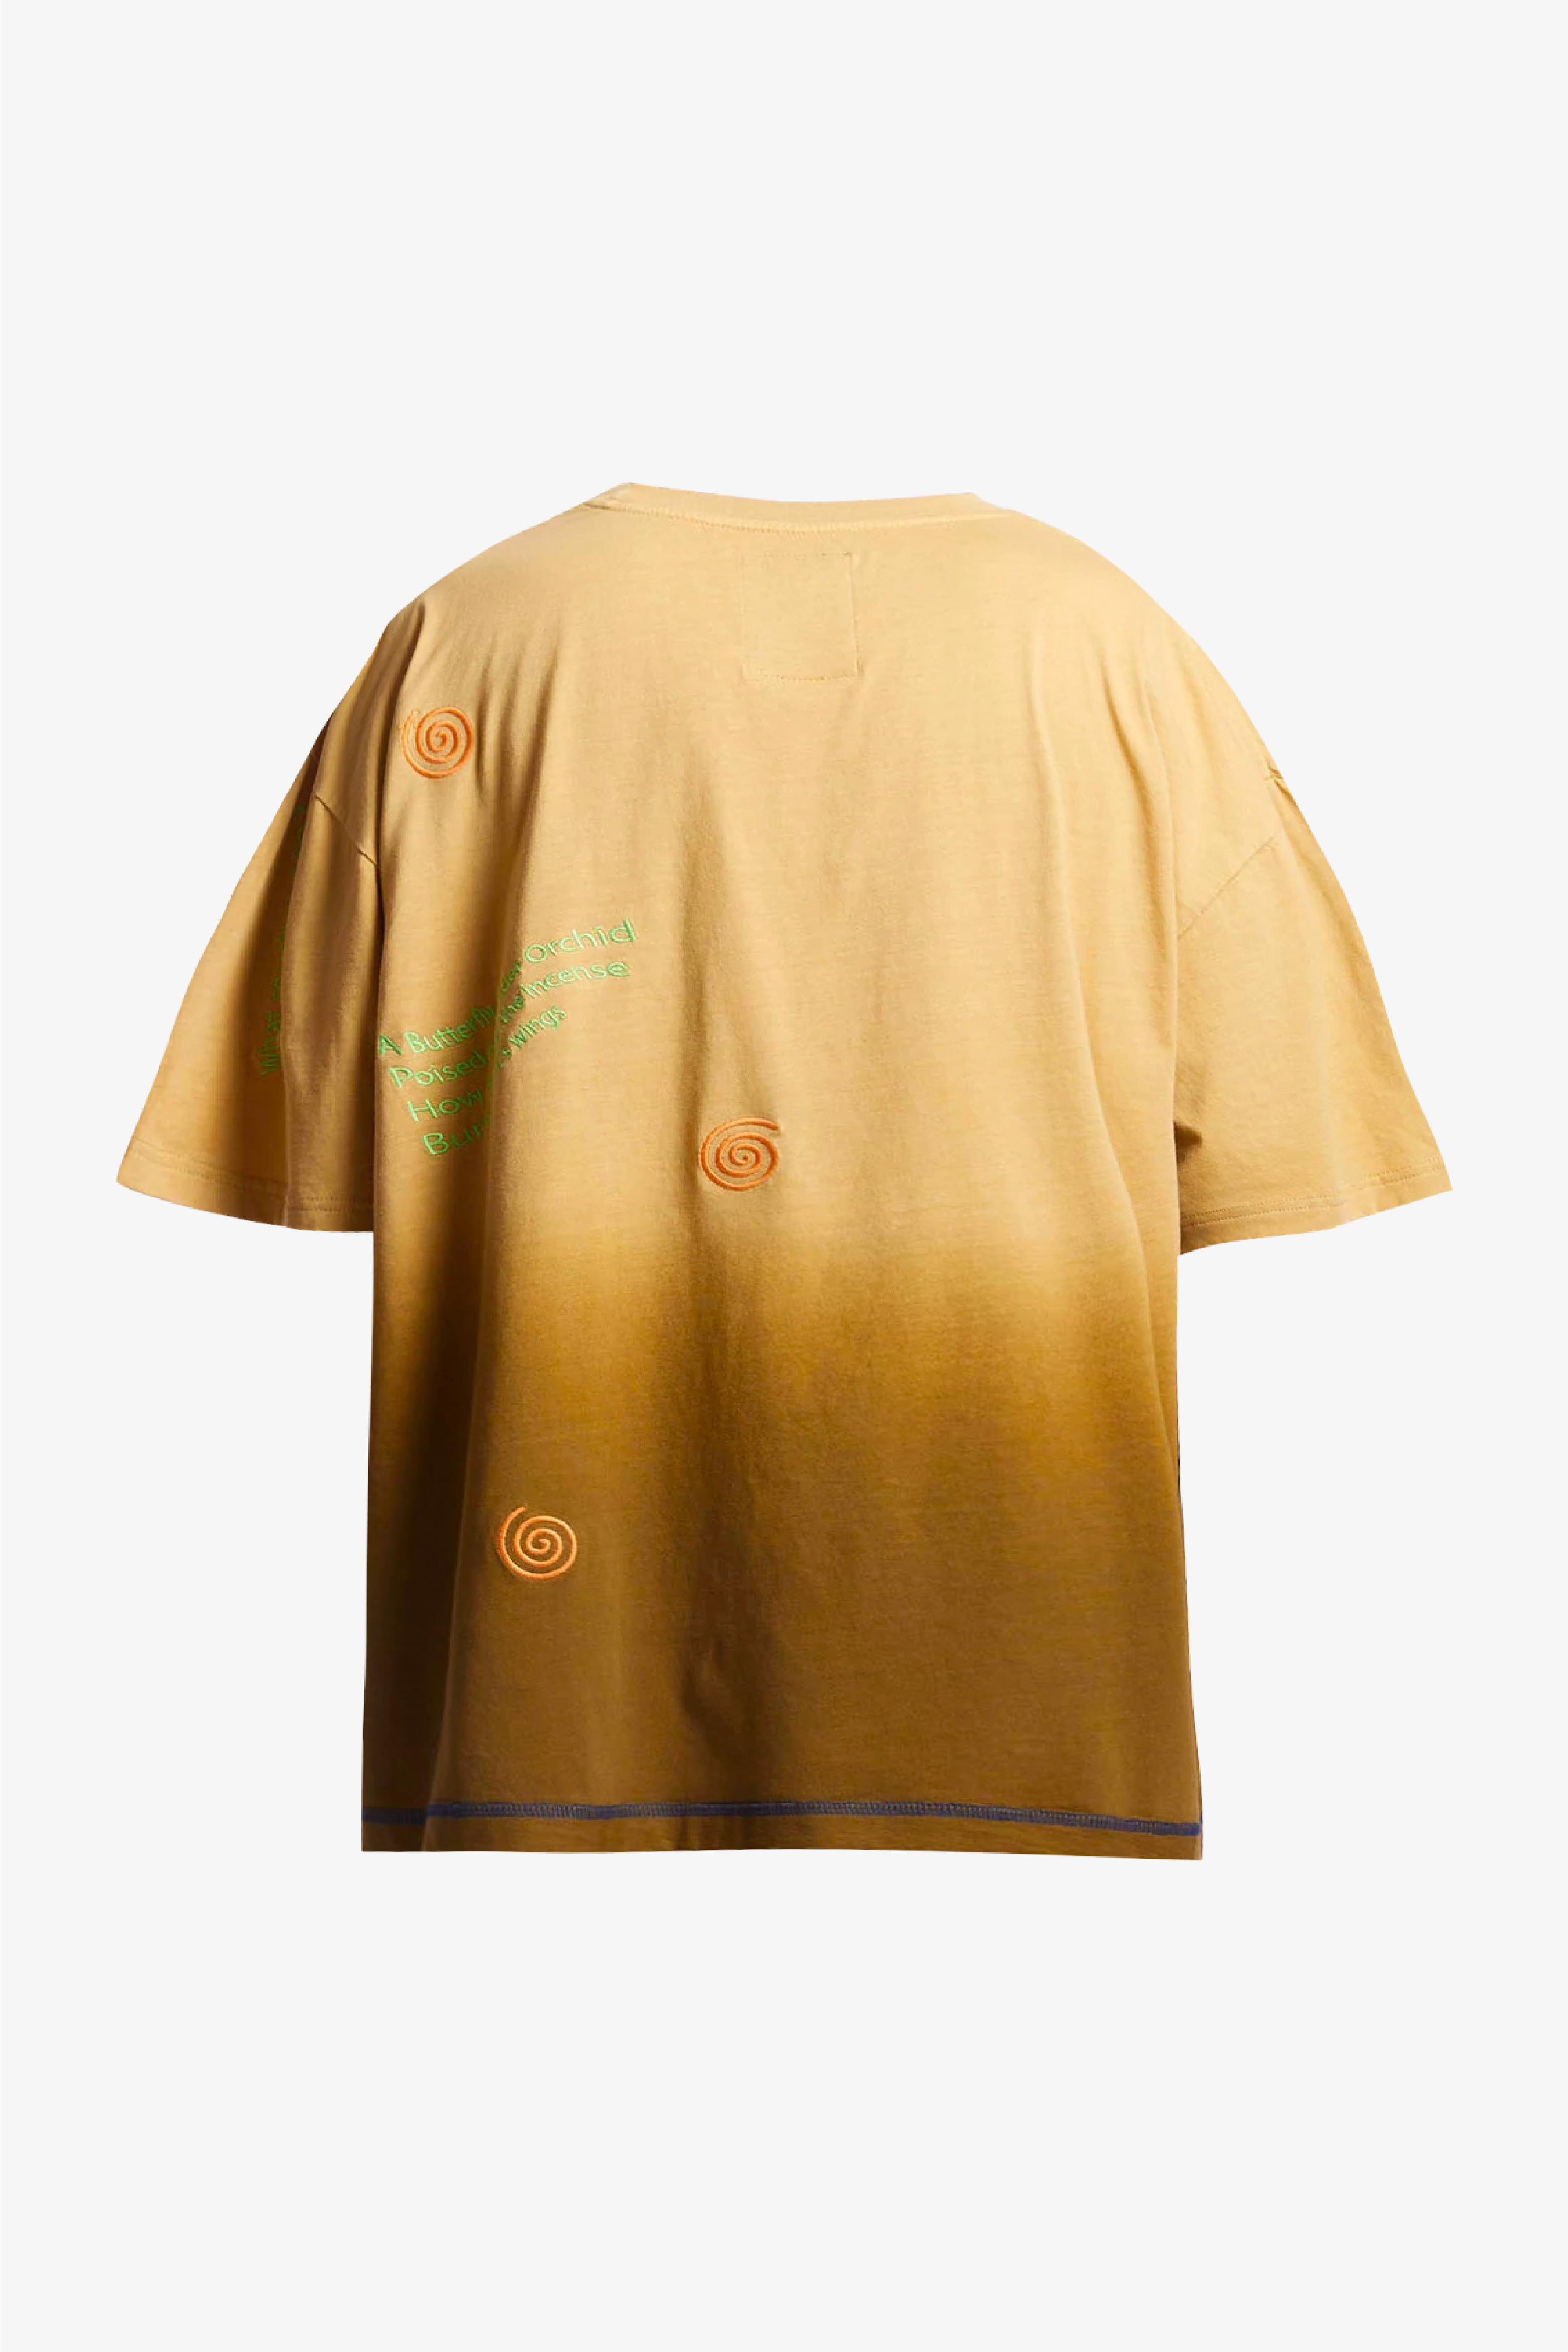 Selectshop FRAME - PAM Dip Into Neo Basho Reversible Top T-Shirts Dubai